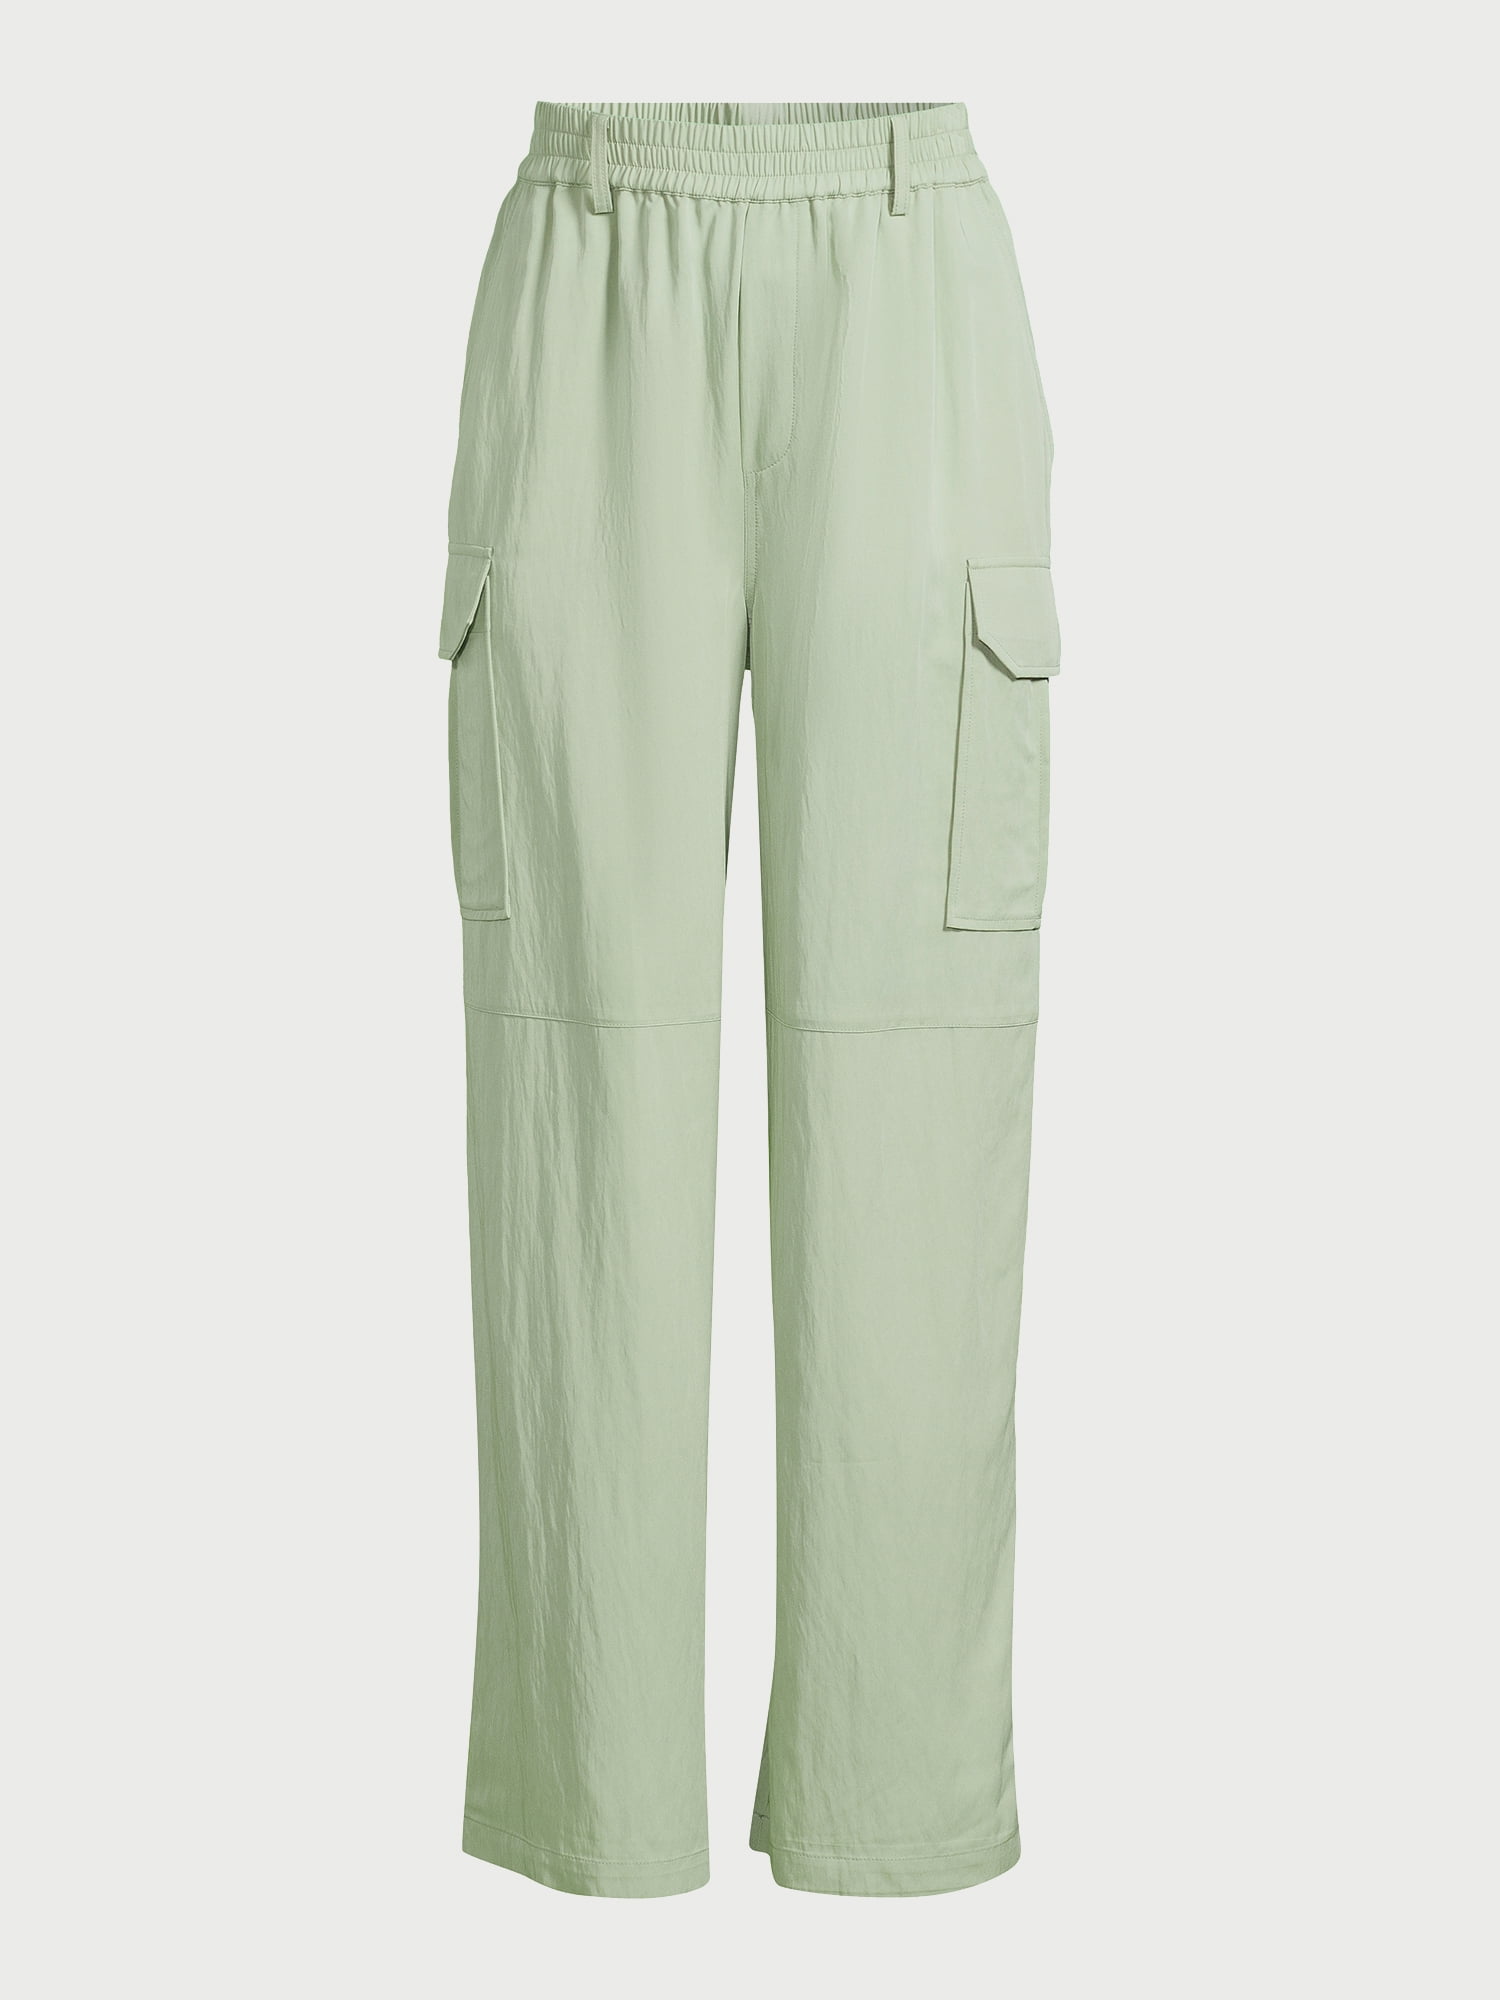 Scoop Women's Cargo Pants, Sizes XS-XXL 